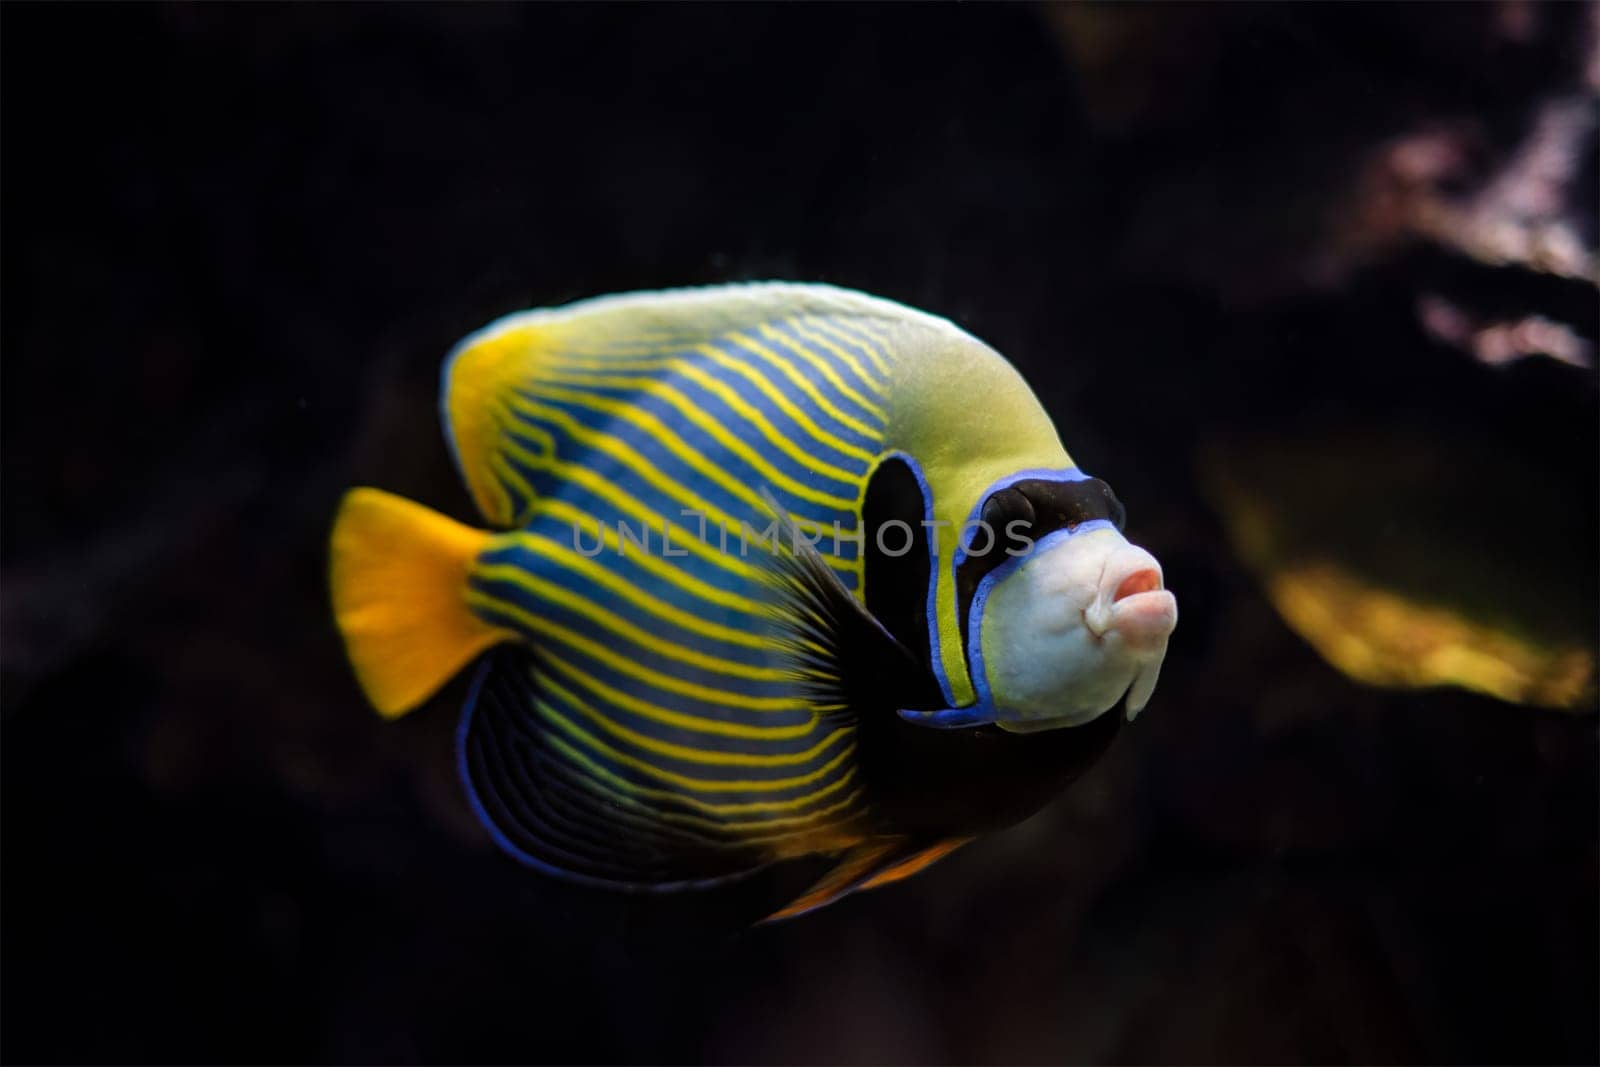 Emperor angelfish fish underwater in sea by dimol